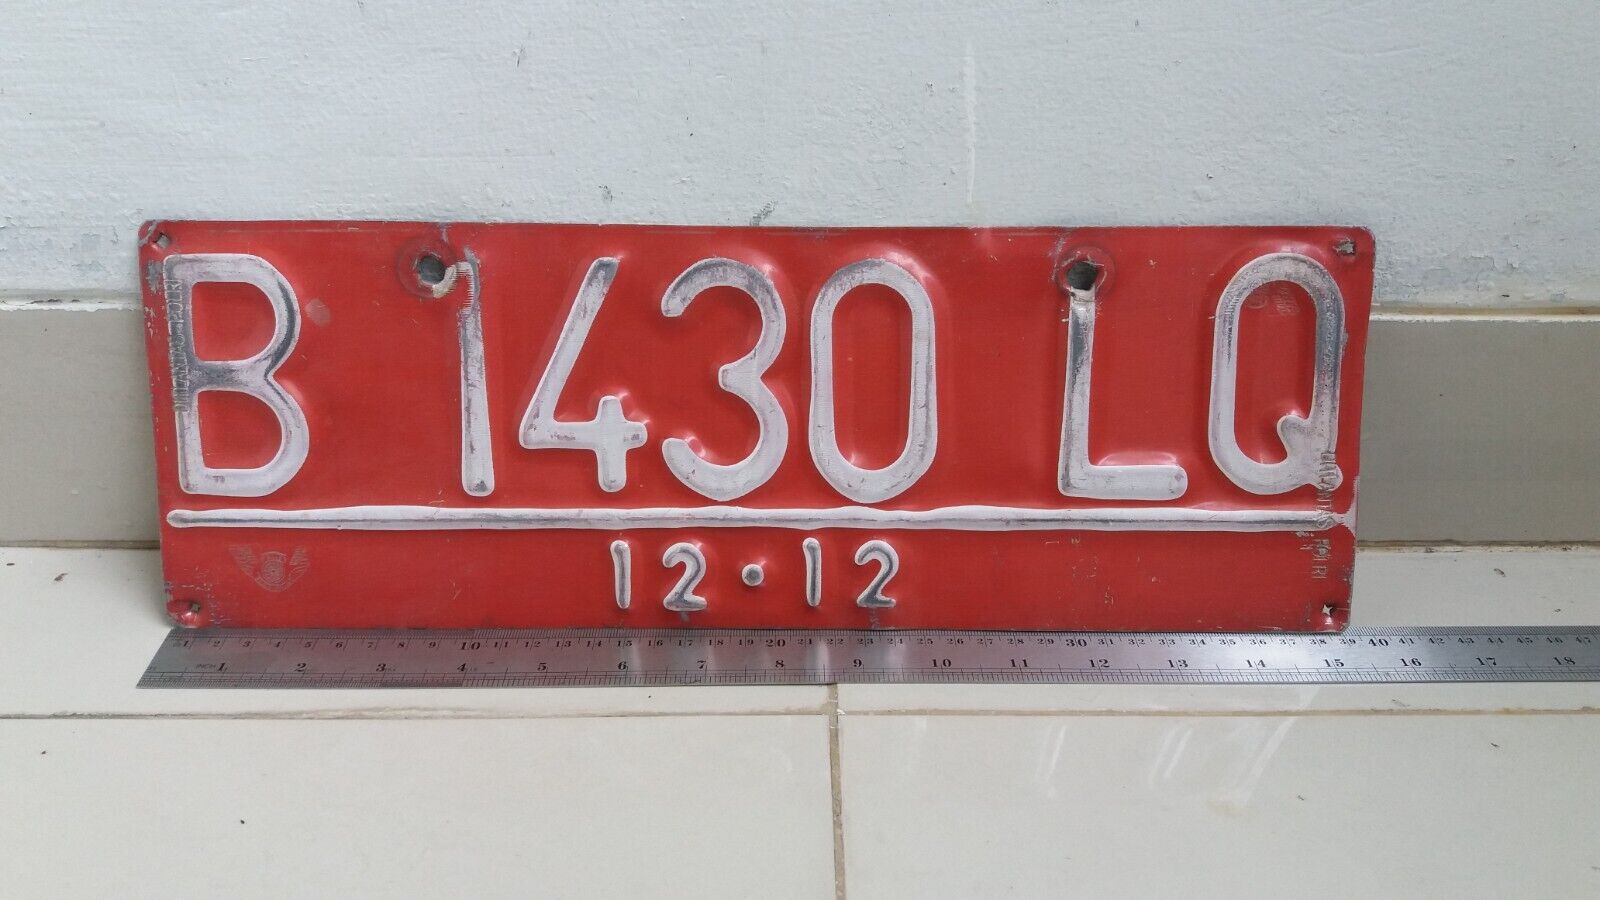 1 Pc Used Original Collectible License Car Plate B 1430 LQ Indonesia 2012